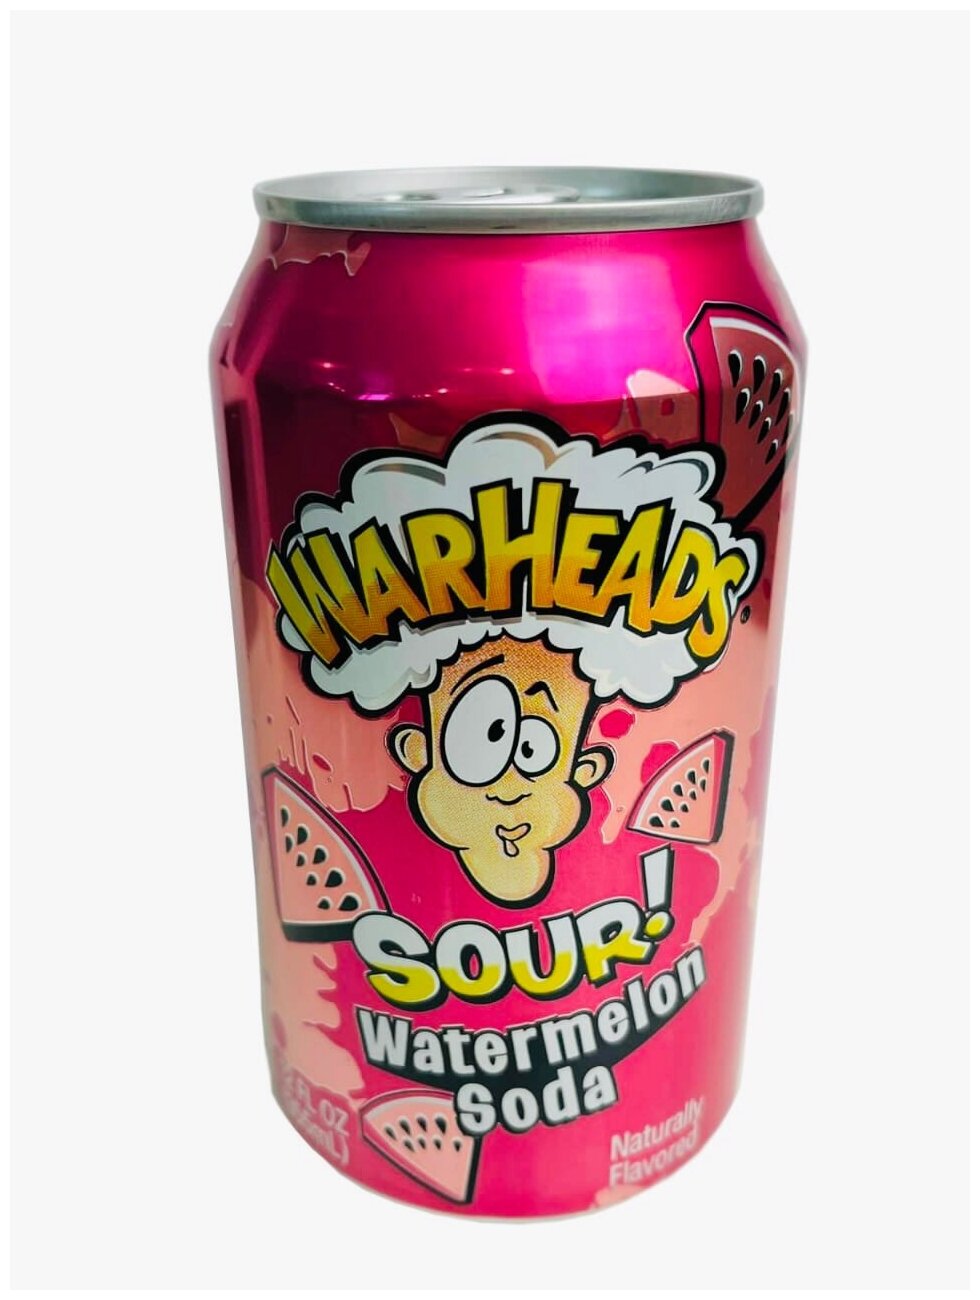 WarHeads Sour напитки - 5 вкусов (набор) - 5шт 0,355 л. США - фотография № 4